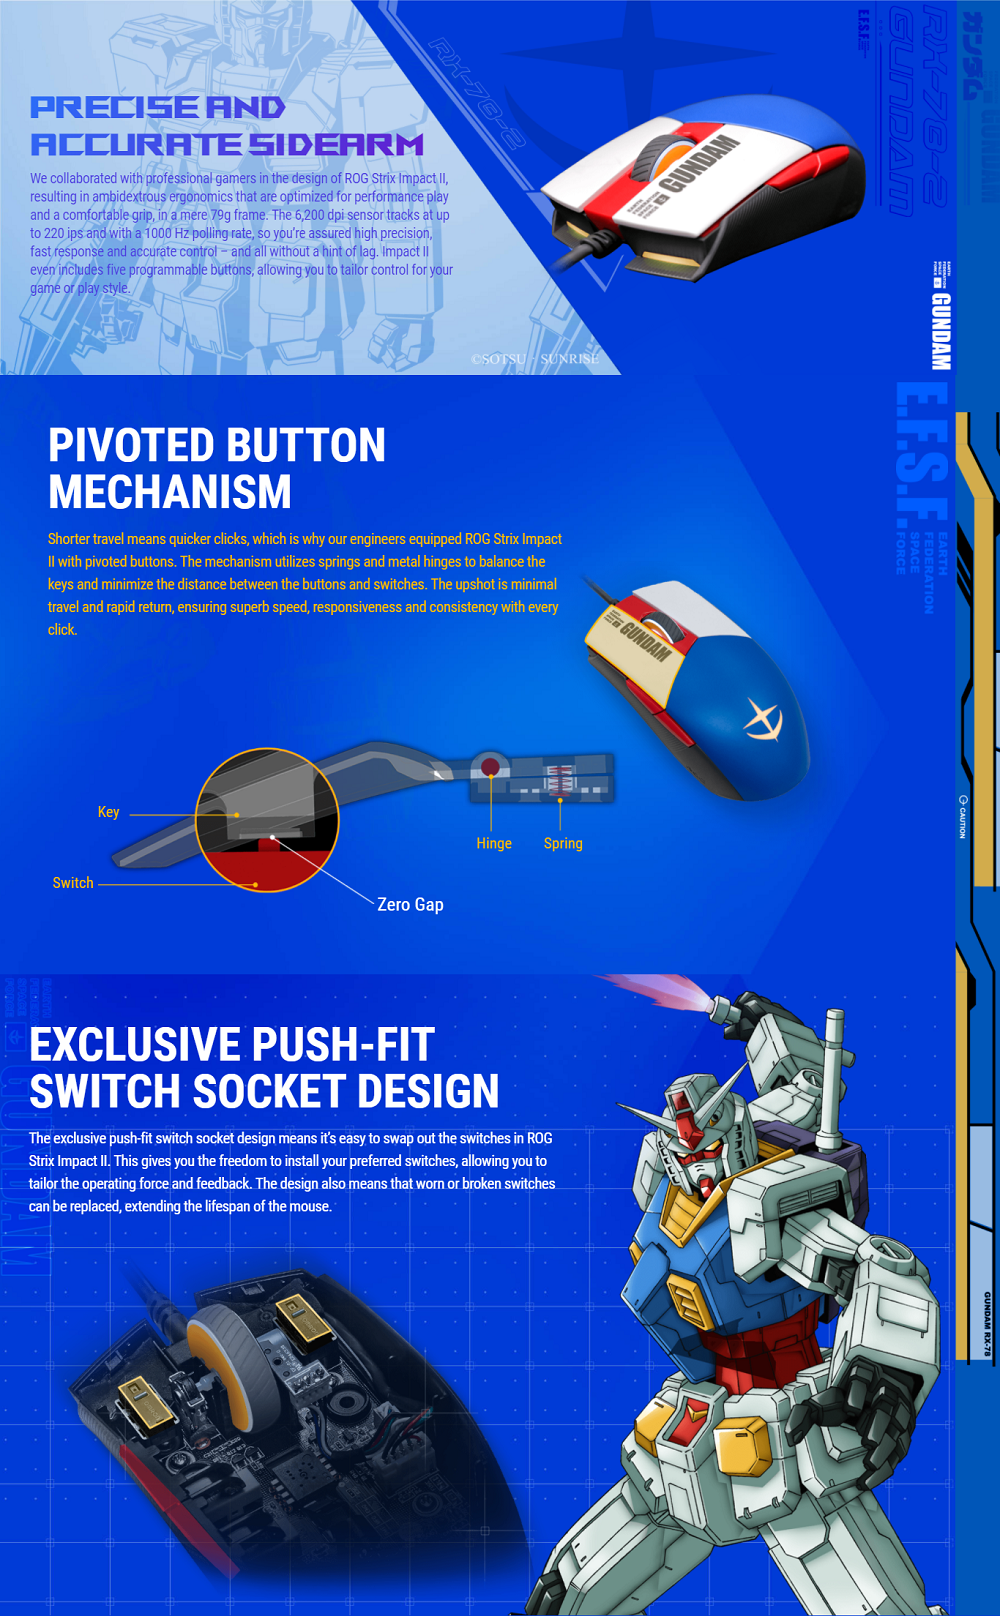 Rog Strix Impact Ii Gundam Edition Ergonomic Gaming Mouse Hachi Tech Marketplace